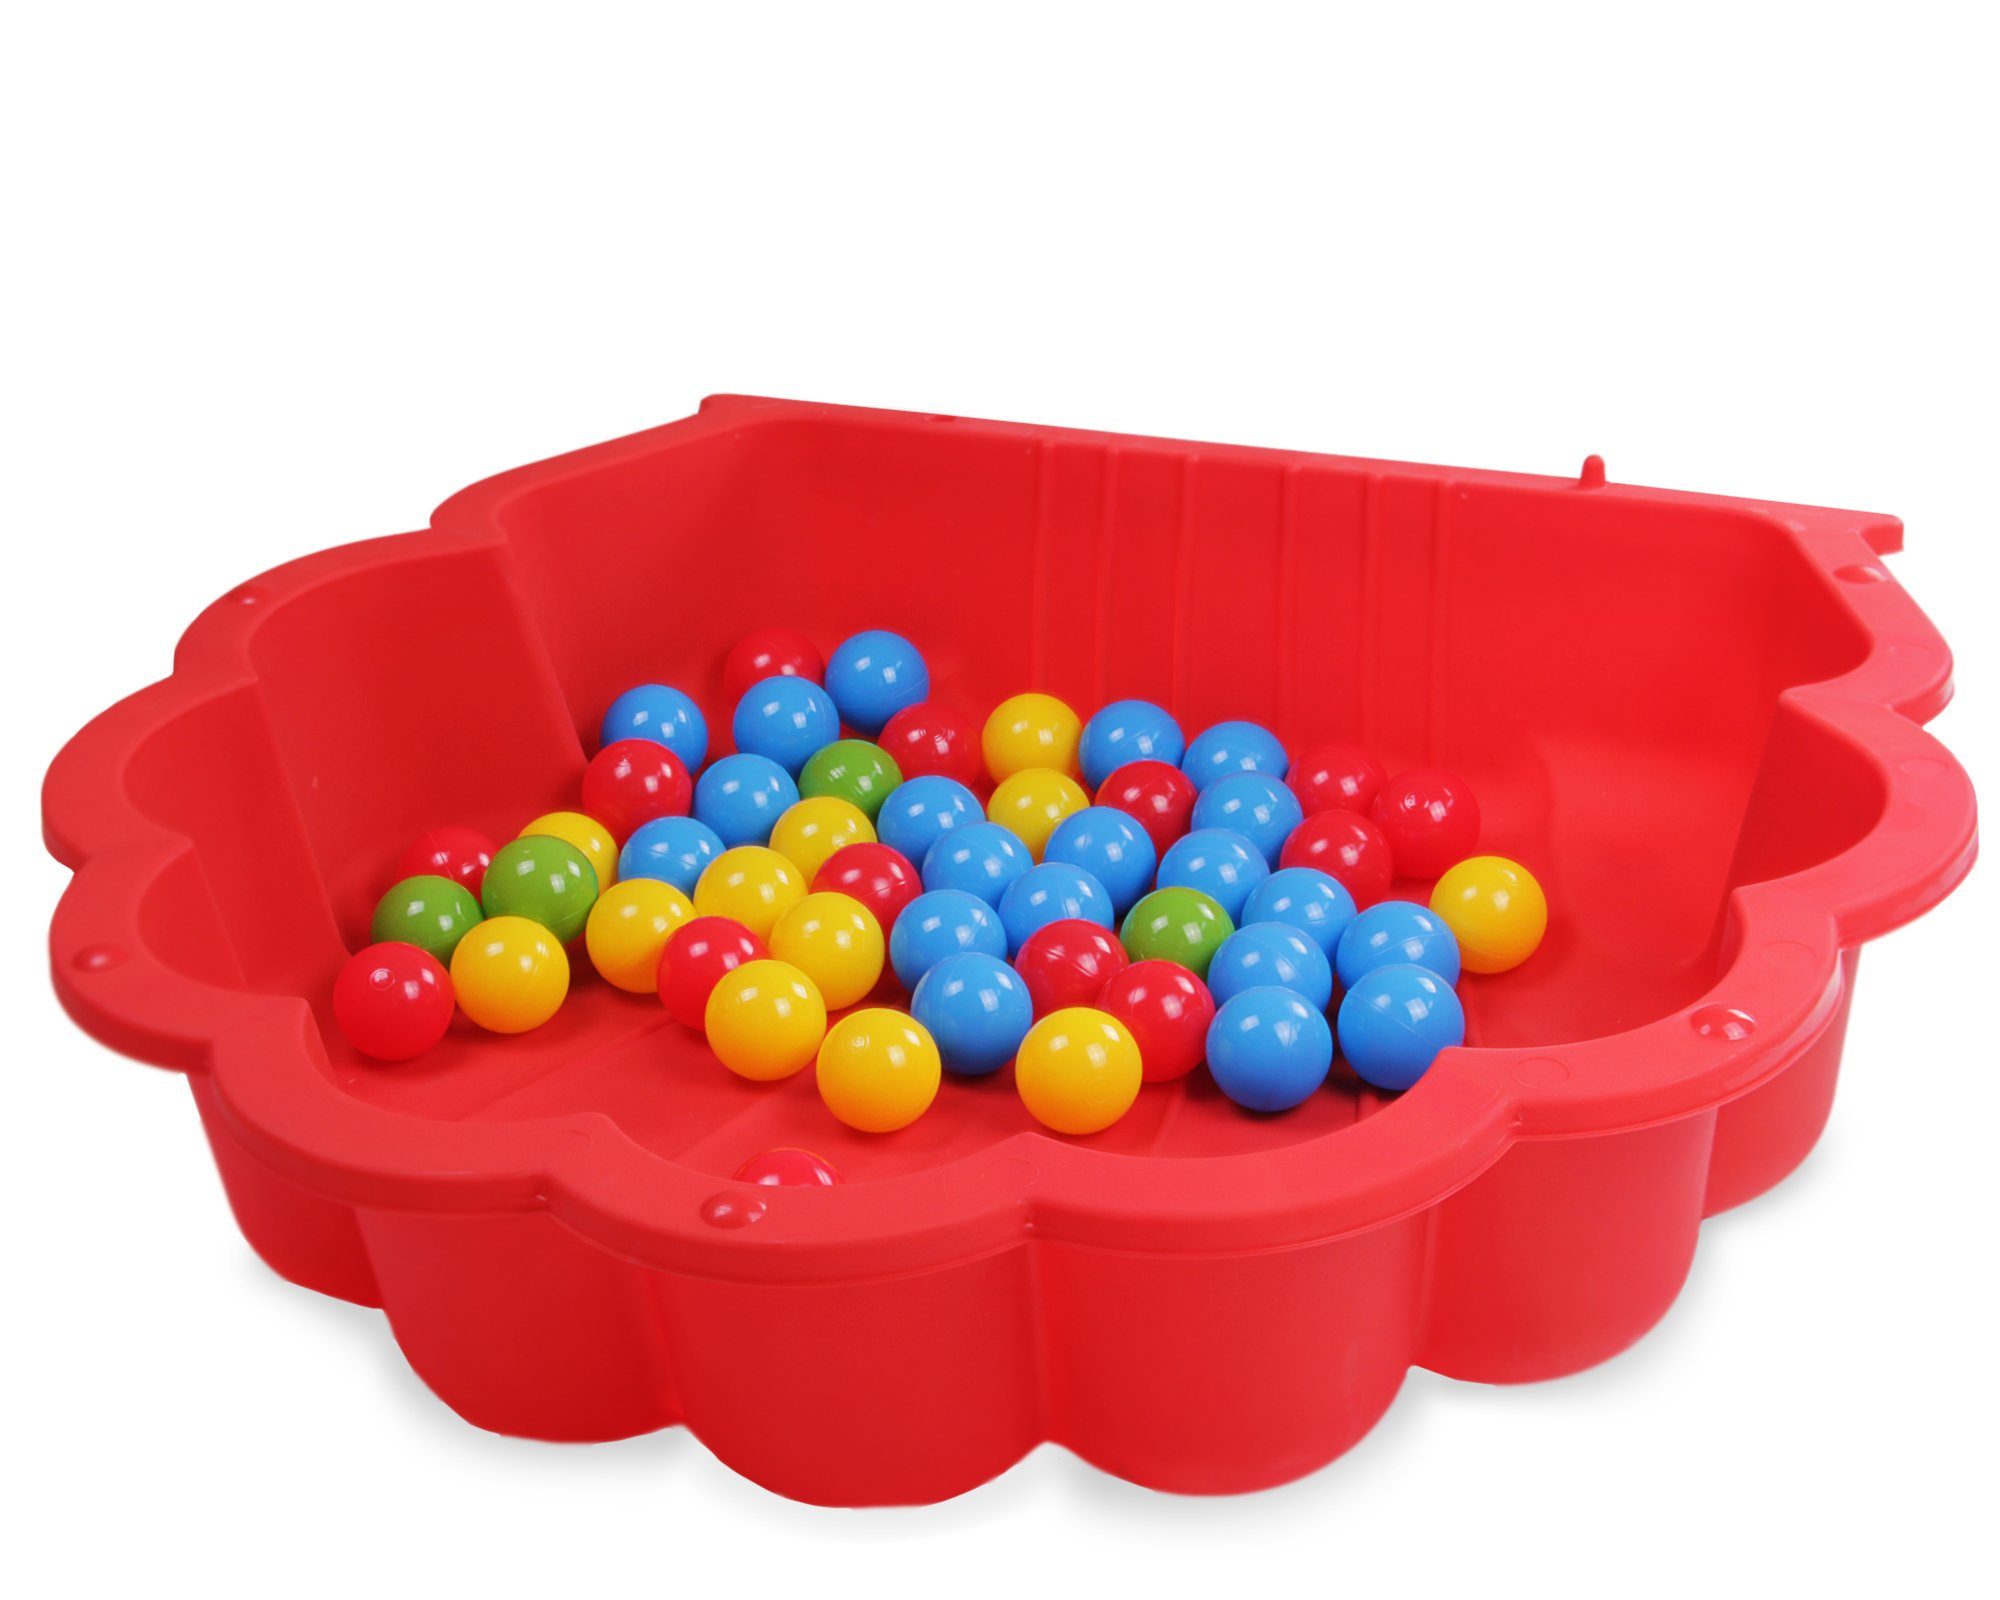 Ballnetz Bällebad-Bälle Set für 100 Bälleparadies, Kinder ONDIS24 Bälle für mit Bällebad Badebälle